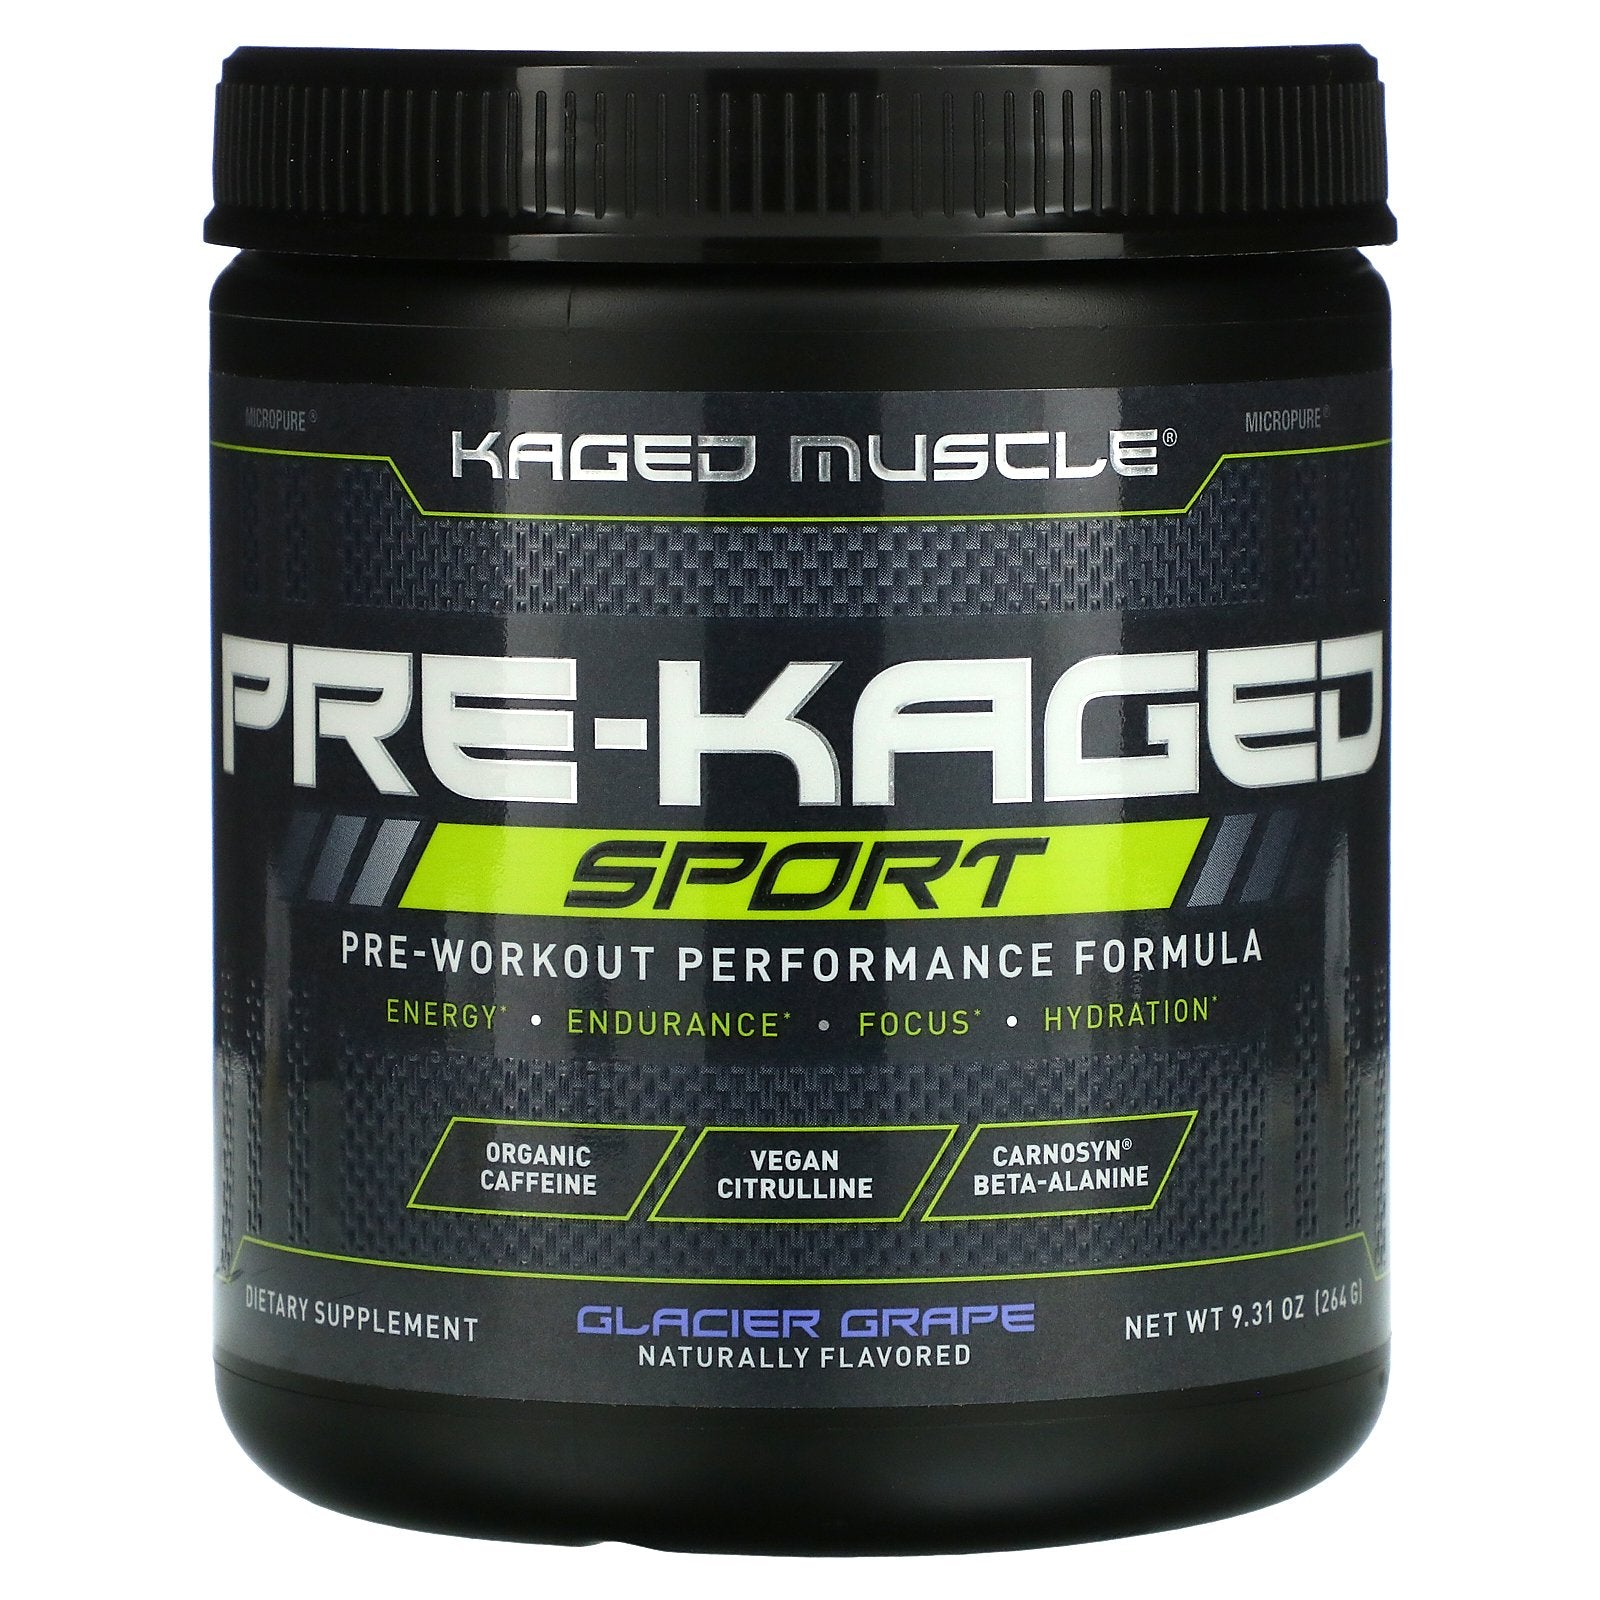 Kaged Muscle, PRE-KAGED Sport, Pre-Workout Performance Formula, Glacier Grape